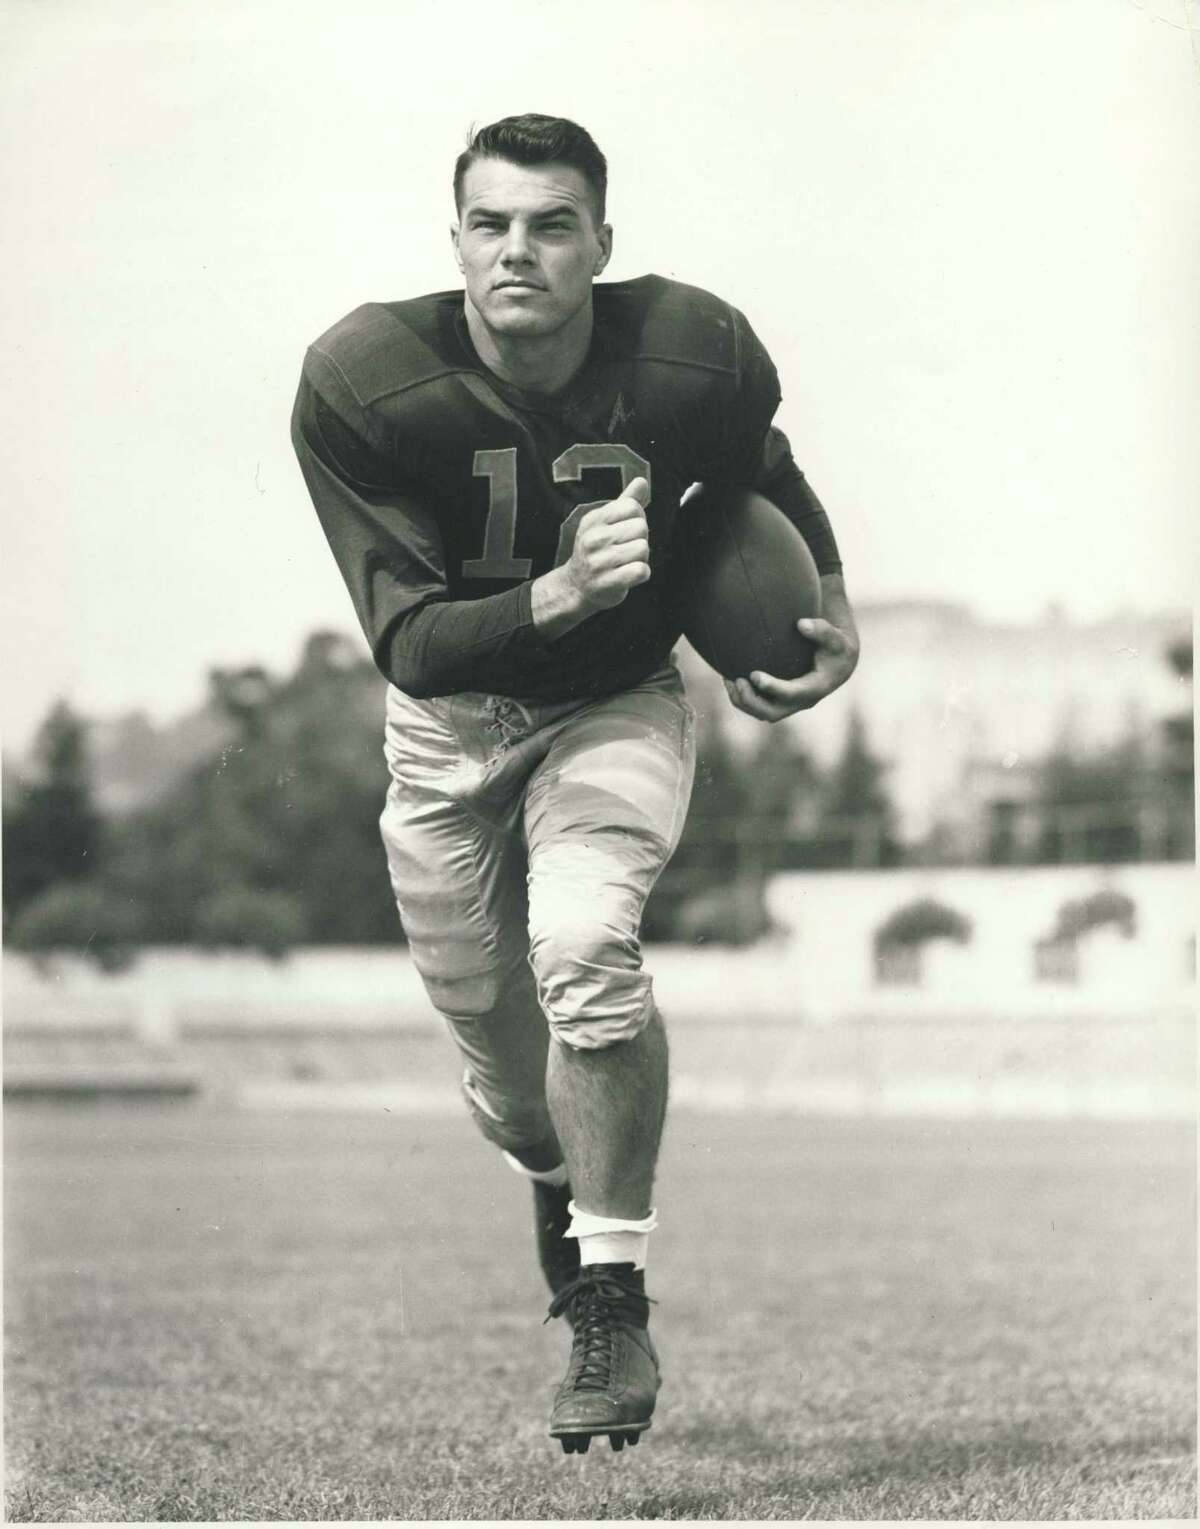 Pete Schabarum played on three Rose Bowl teams at Cal.